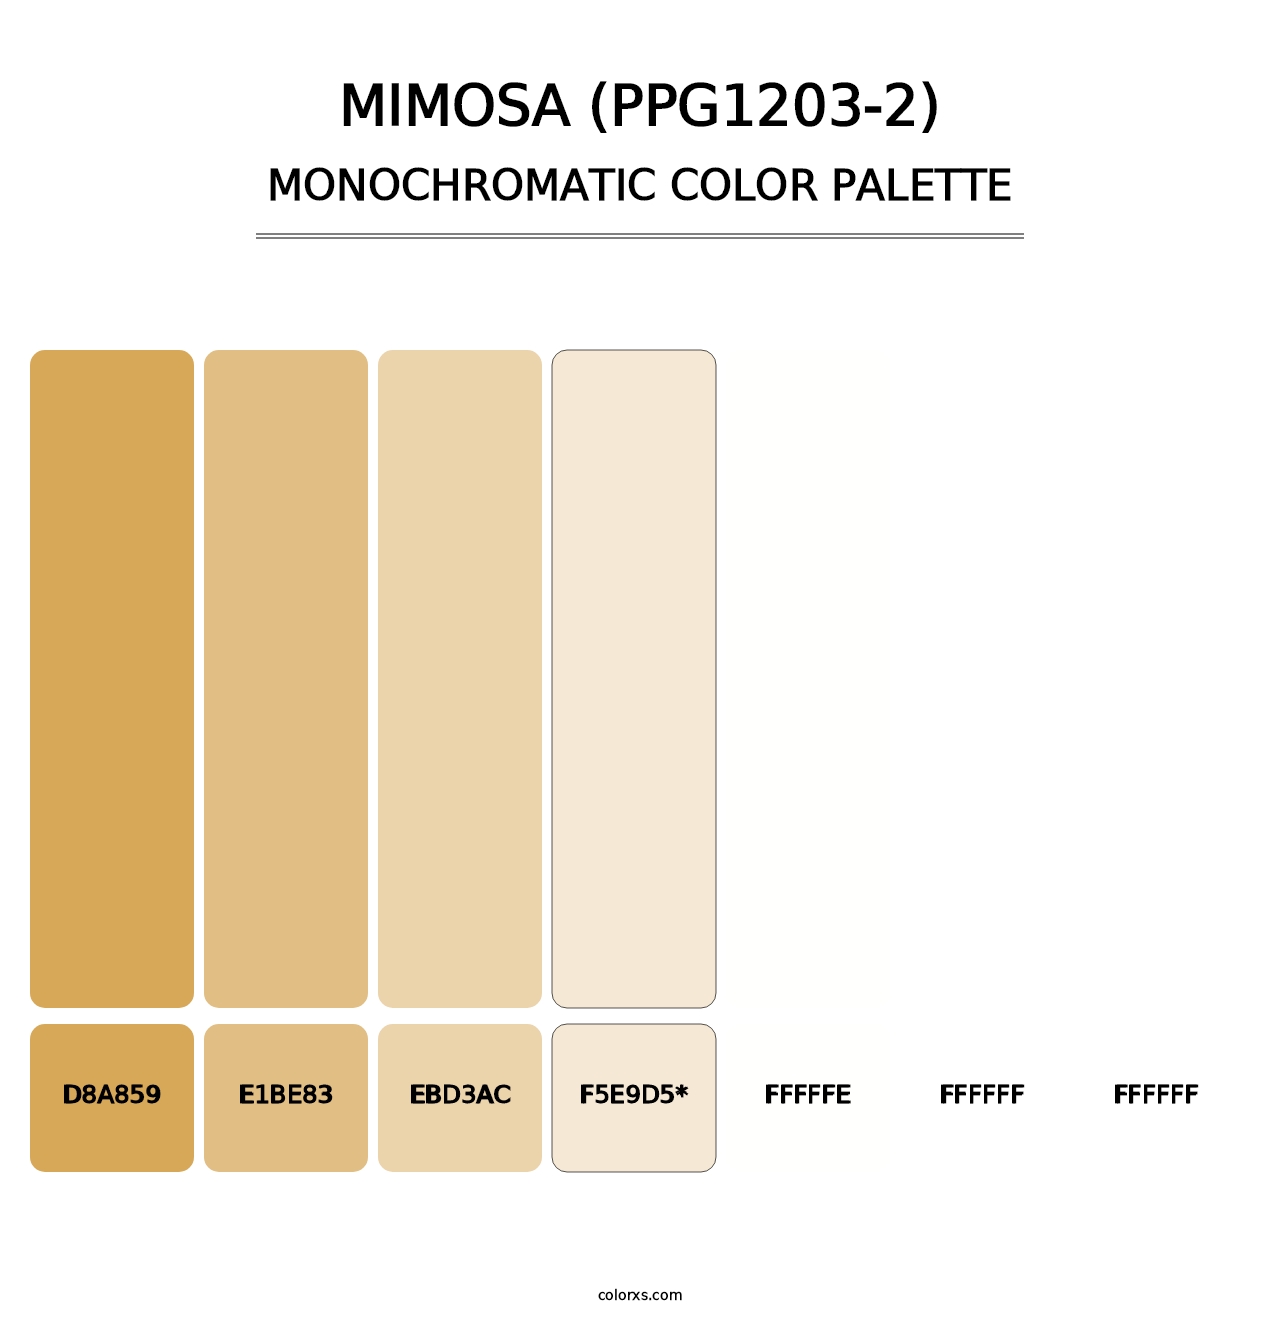 Mimosa (PPG1203-2) - Monochromatic Color Palette